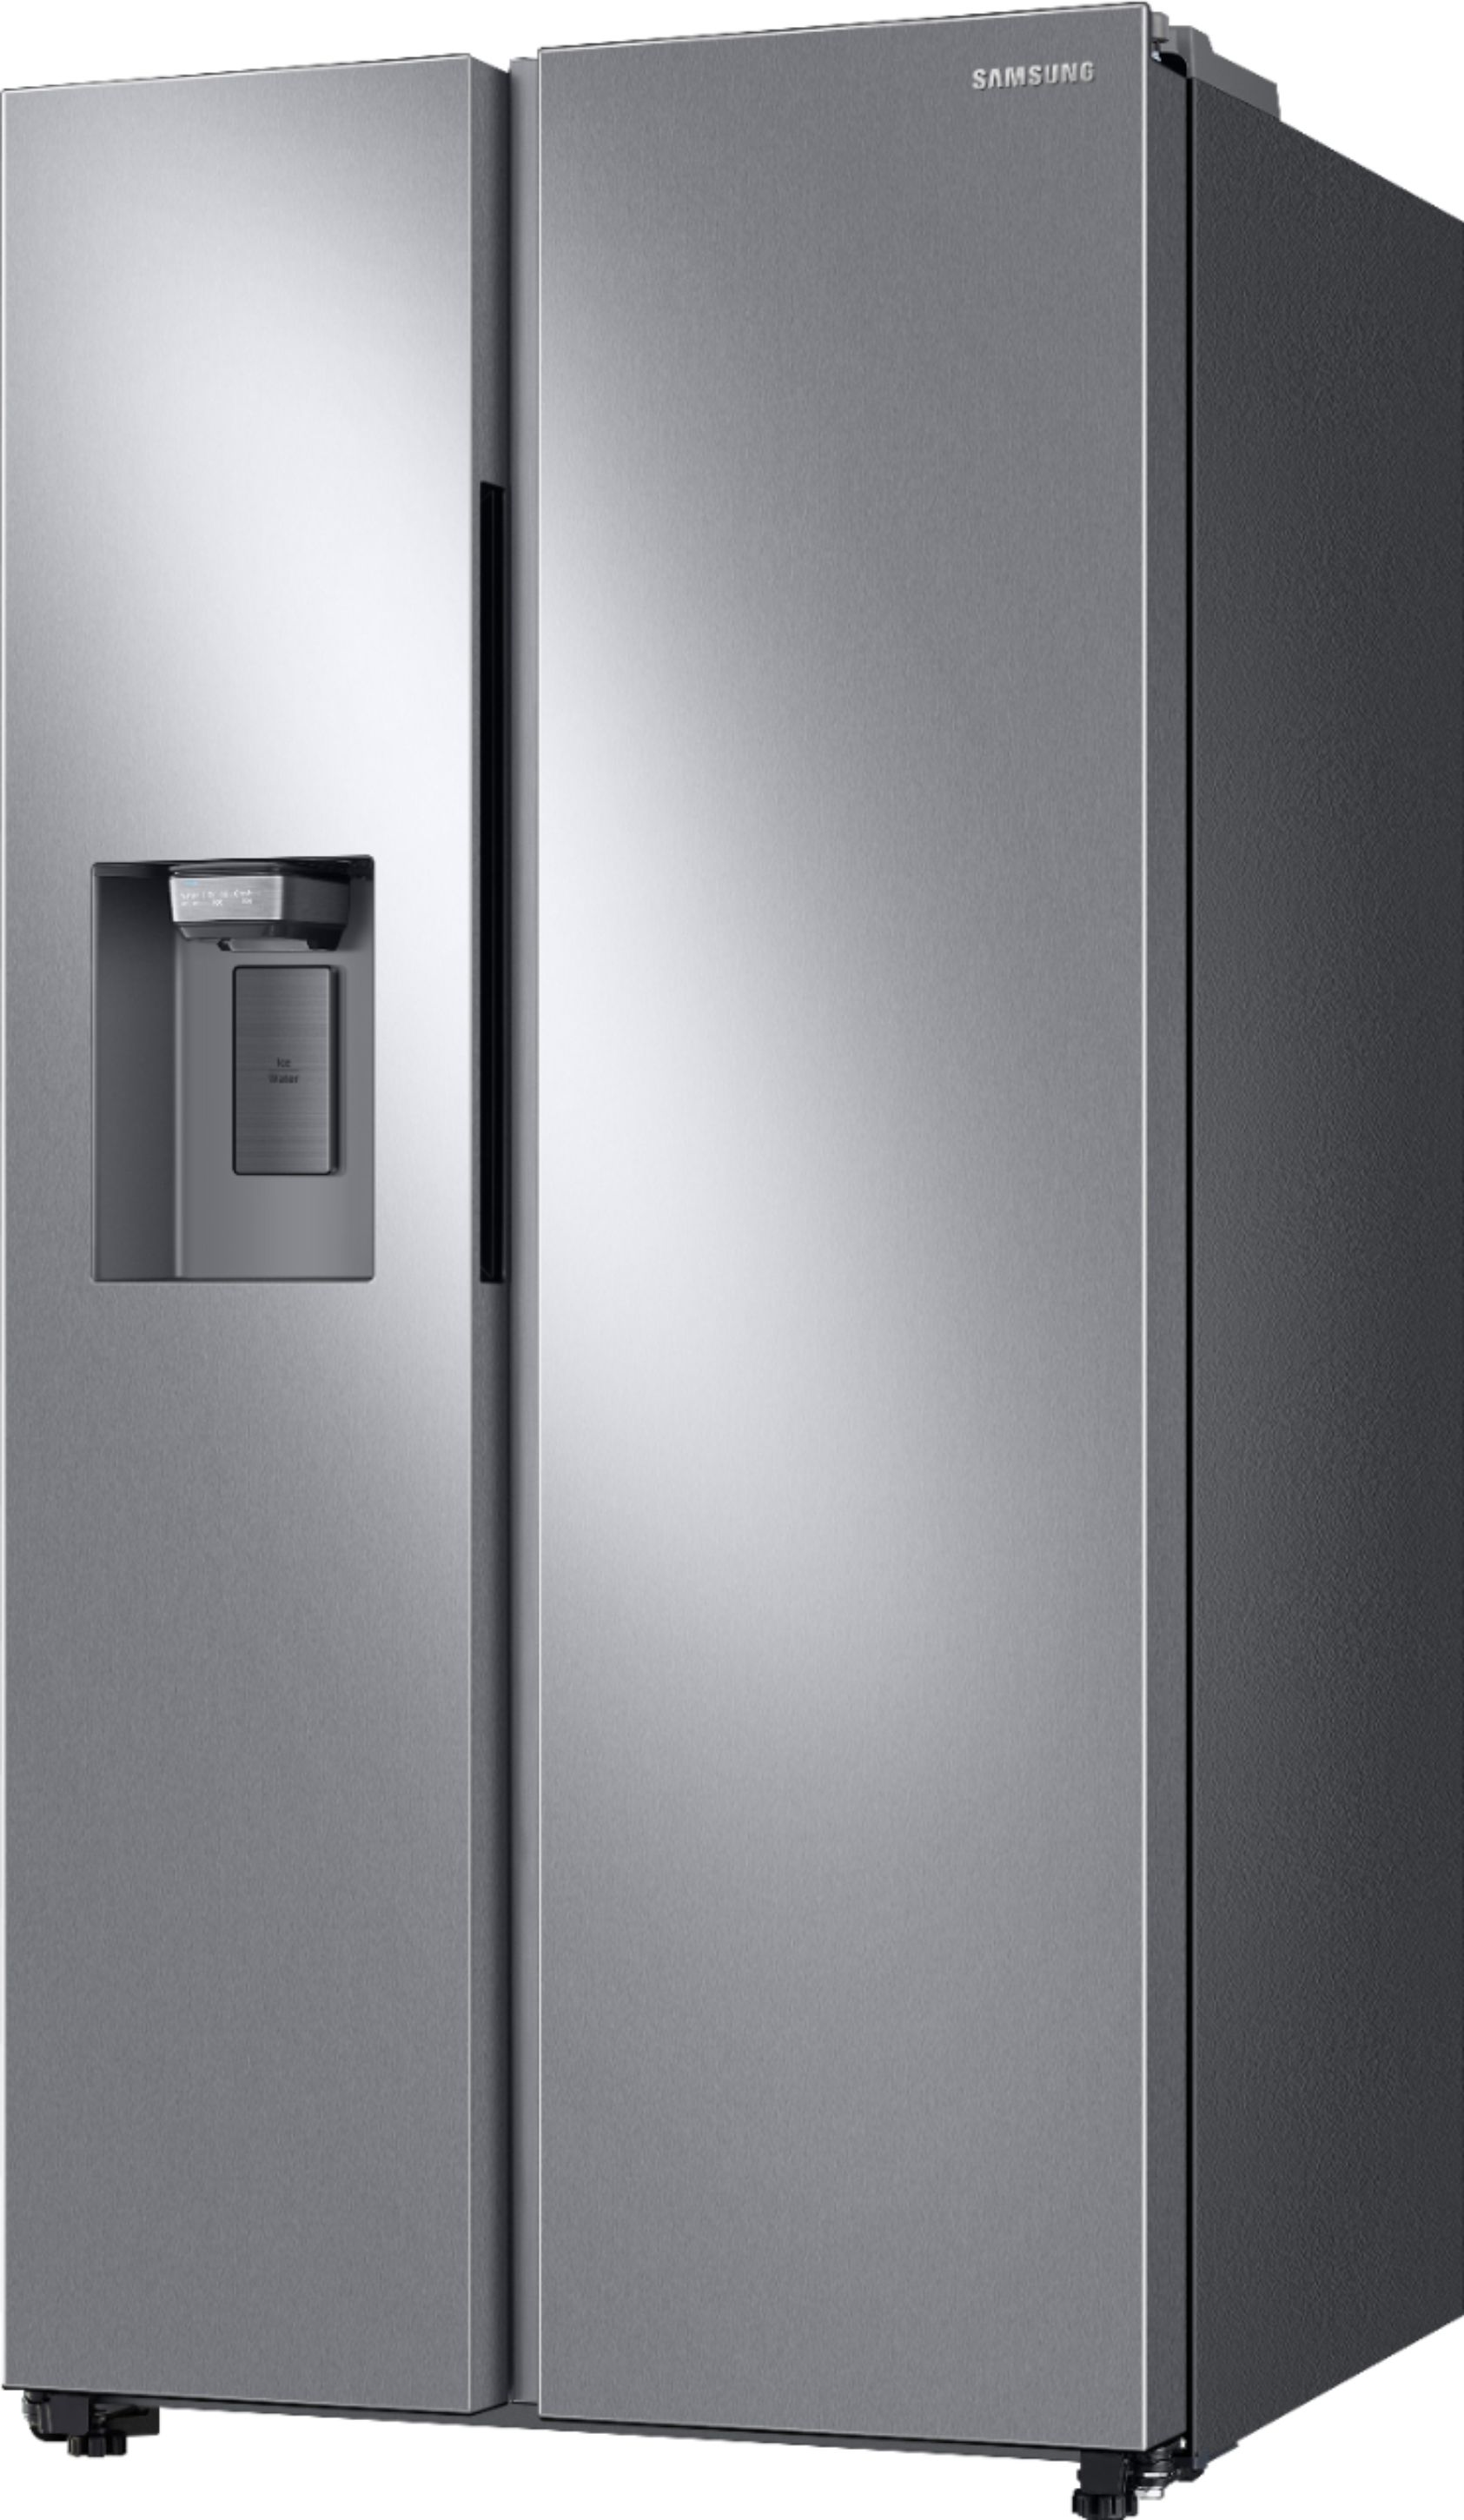 Left View: Samsung - Bespoke 11.4 cu. ft. Flex Column refrigerator - Grey glass